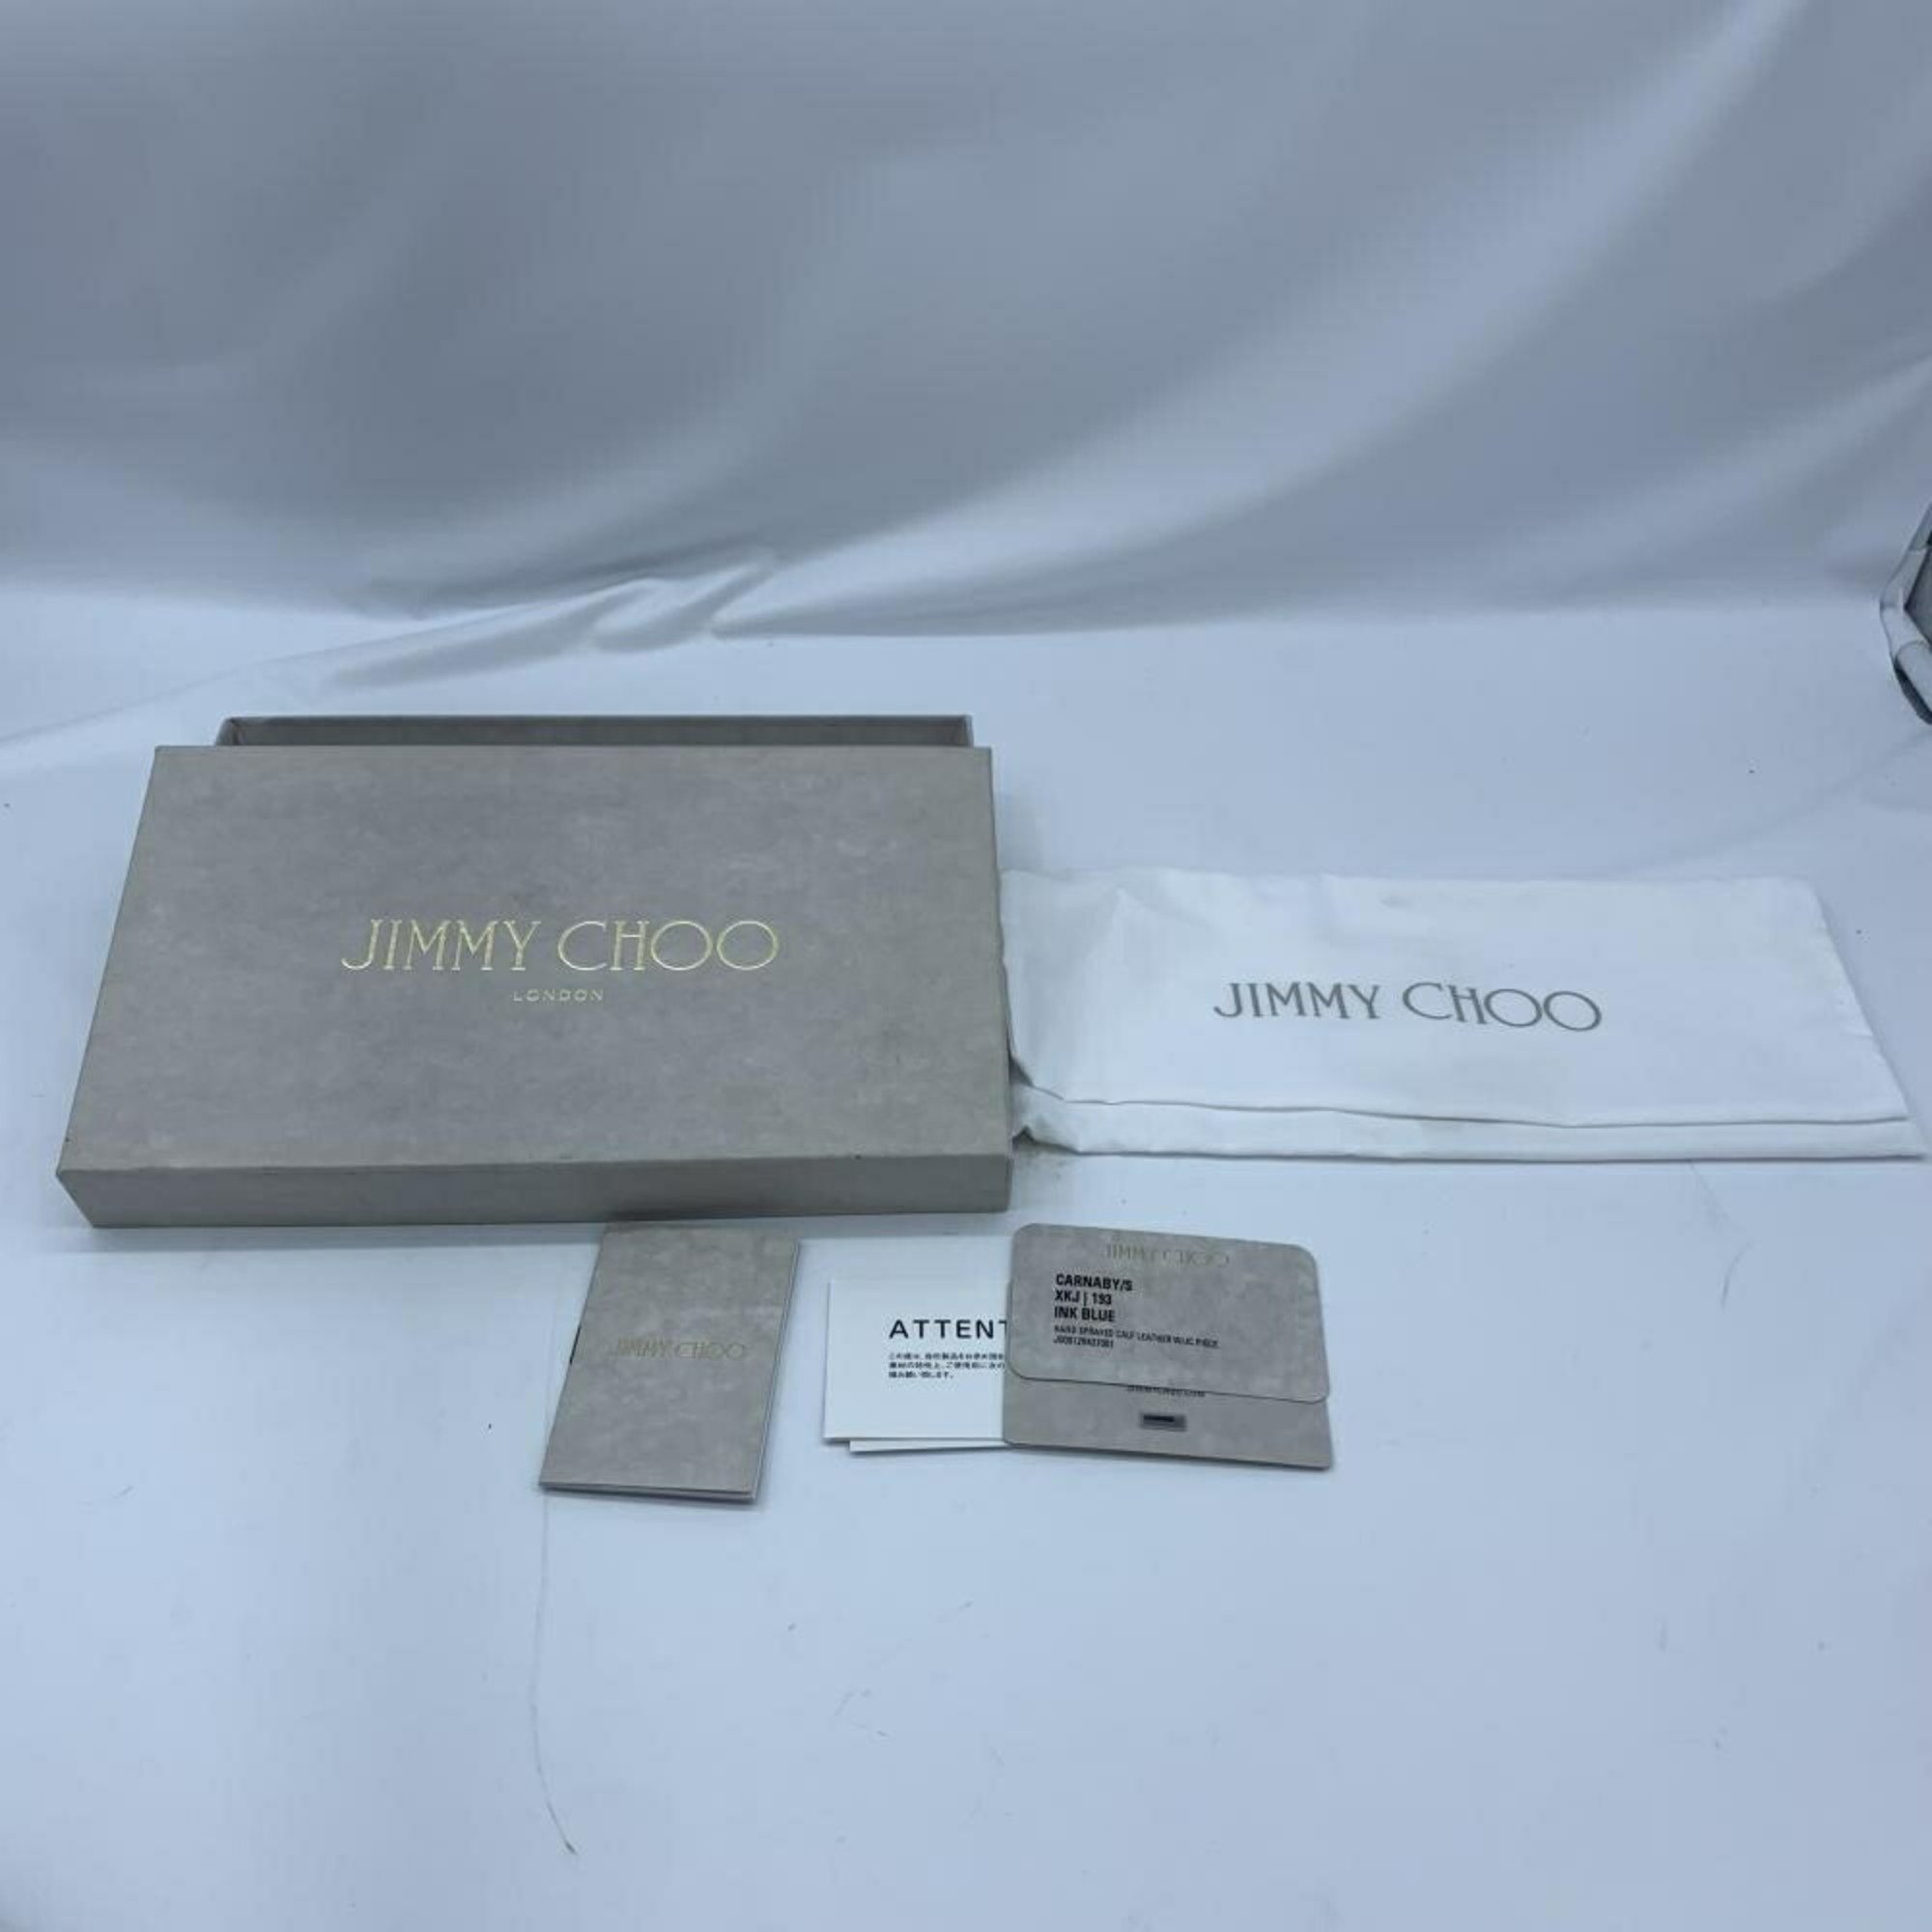 JIMMY CHOO 193CARNABY Round Zip Wallet Navy Jimmy Choo